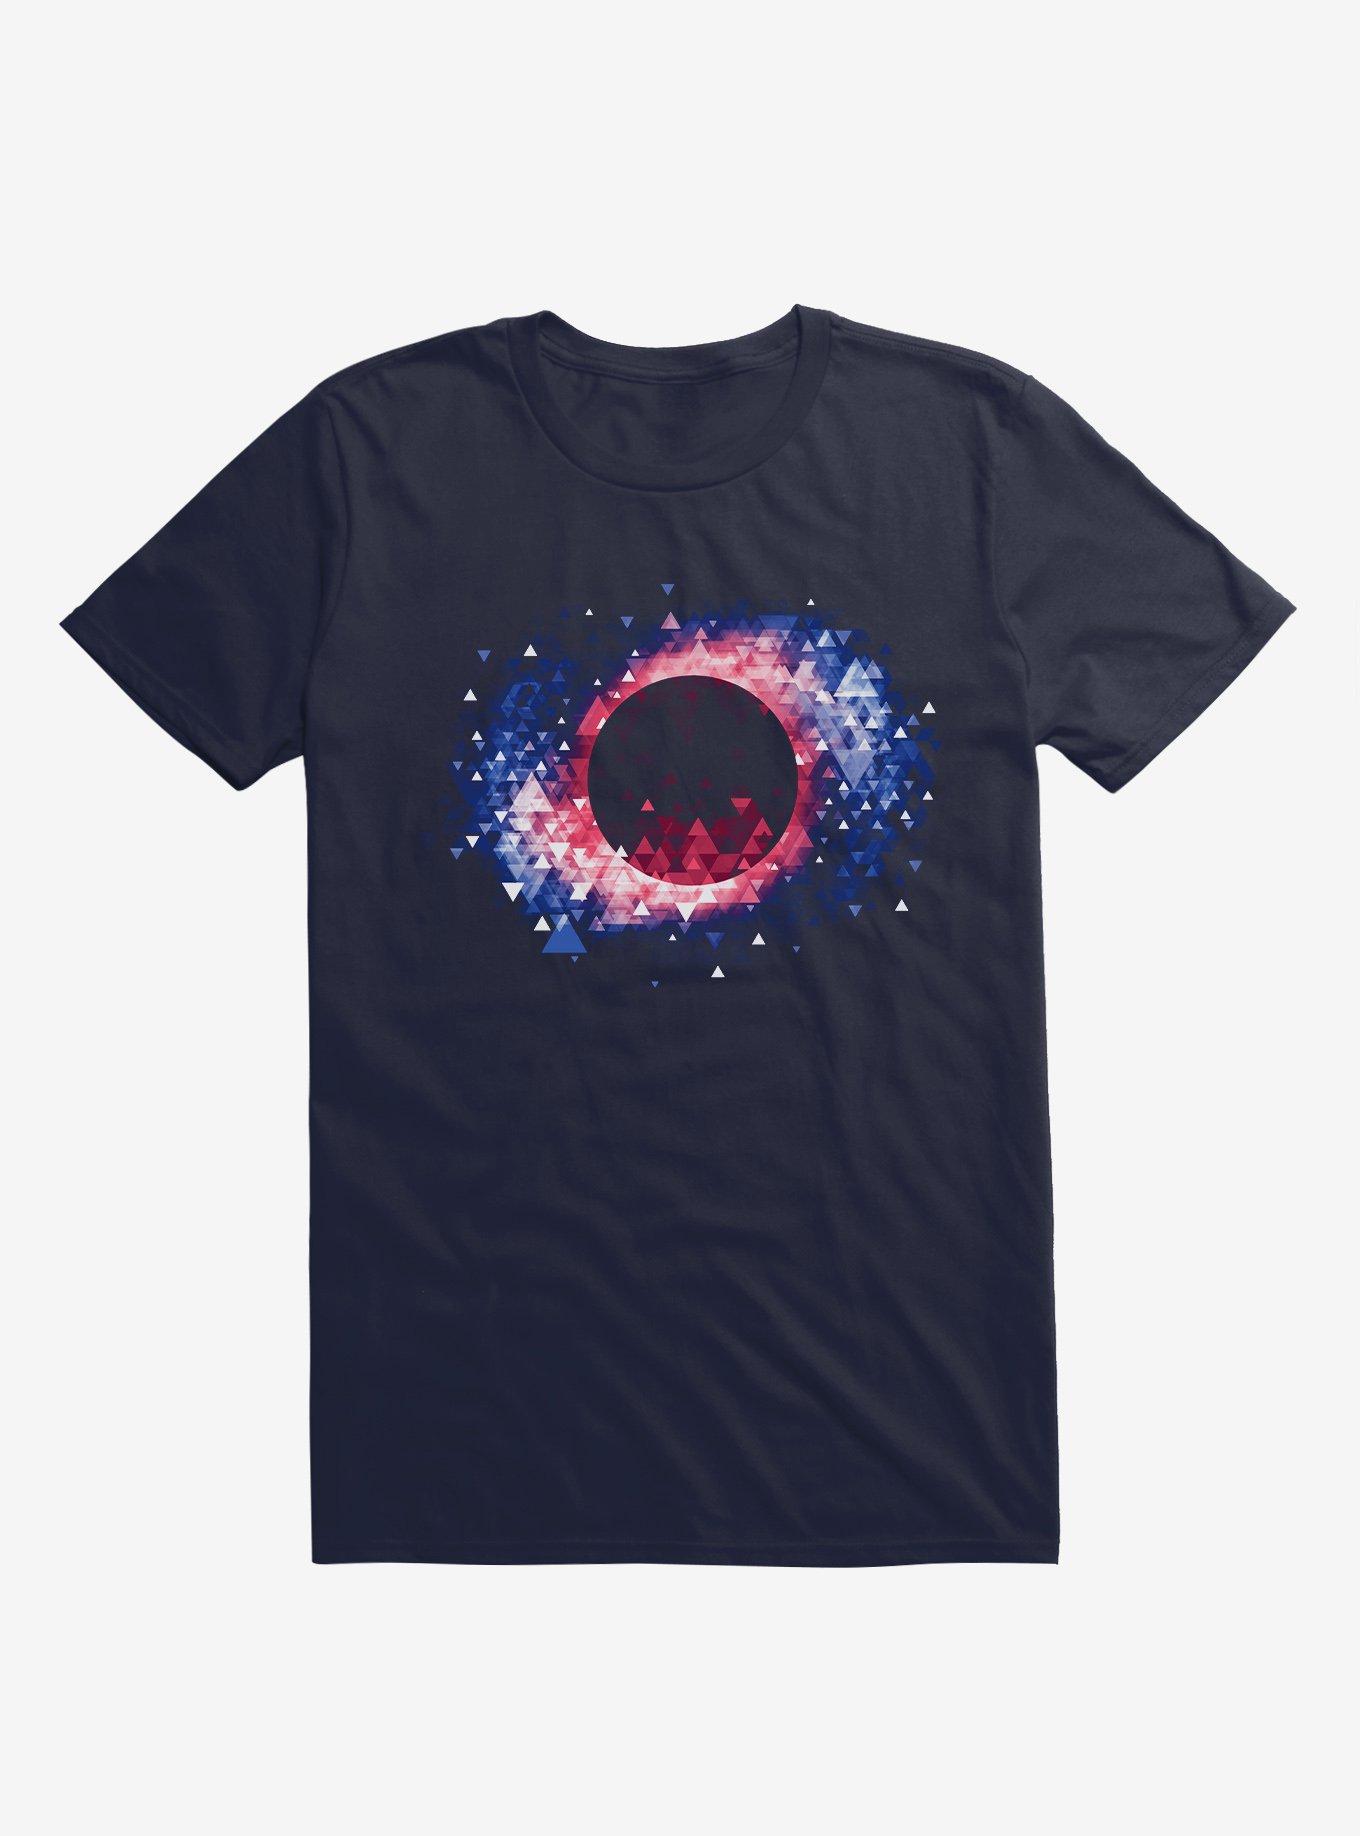 Black Hole Space Navy Blue T-Shirt